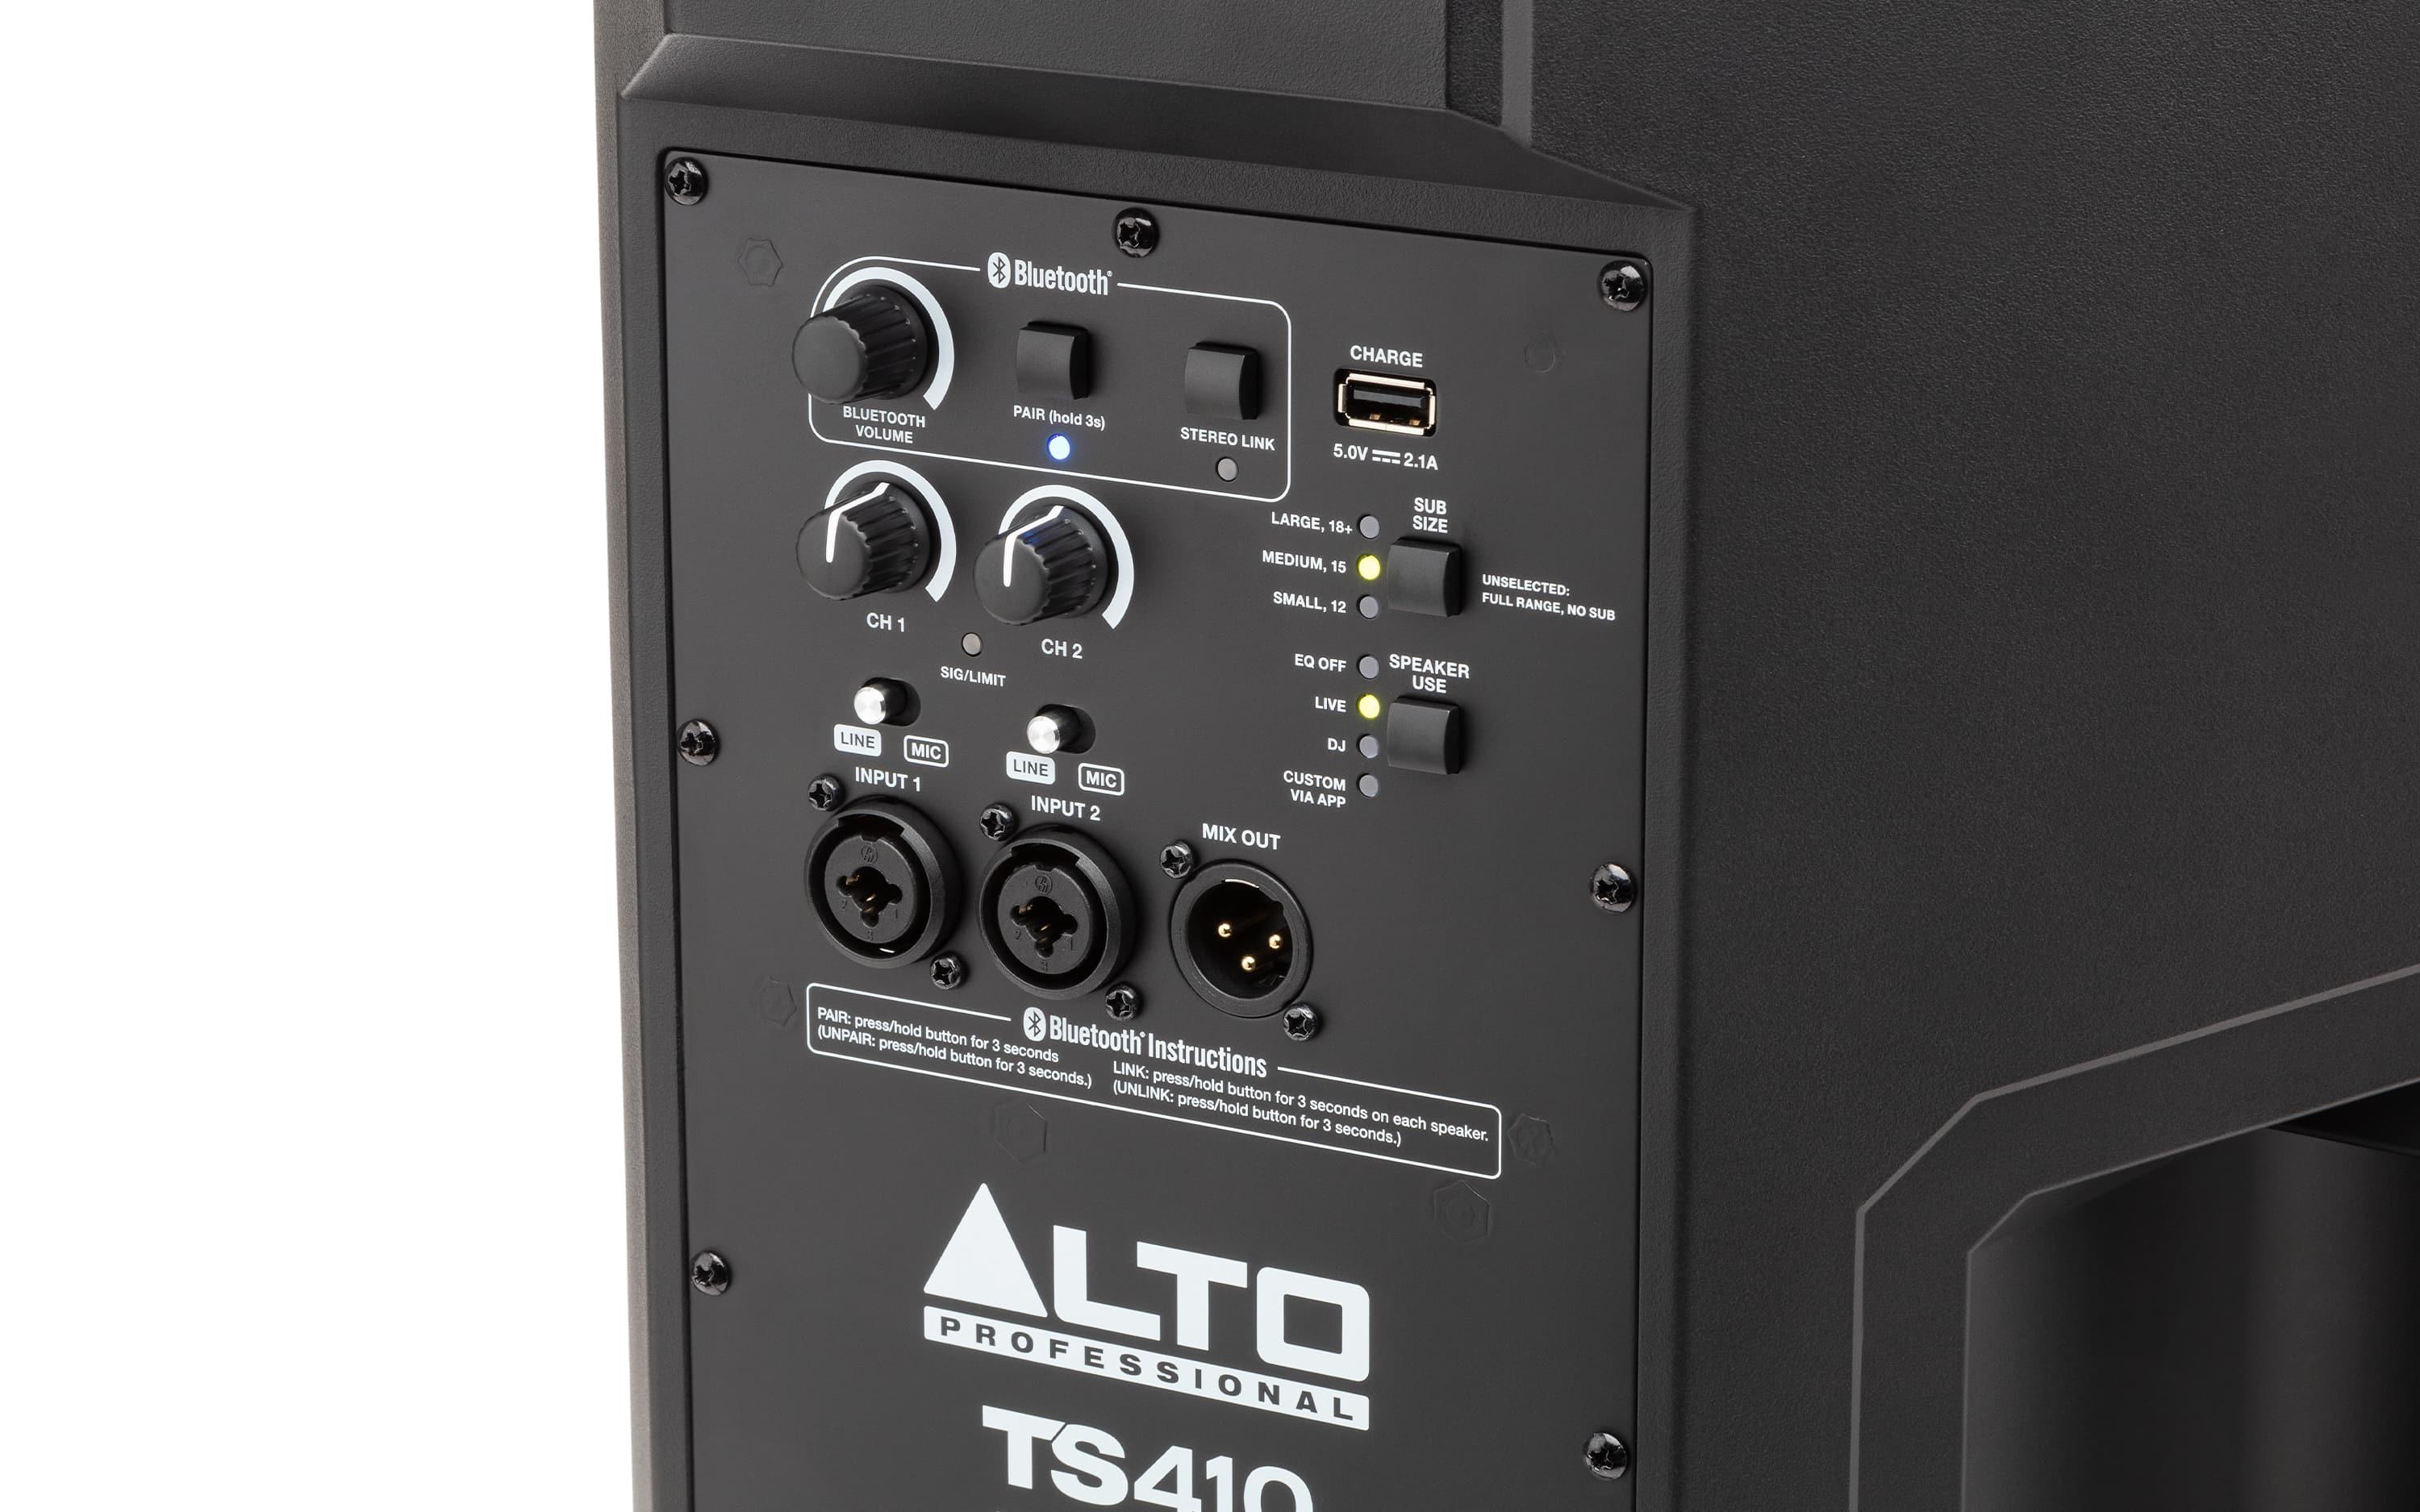 Alto Professional TS410 rear detail